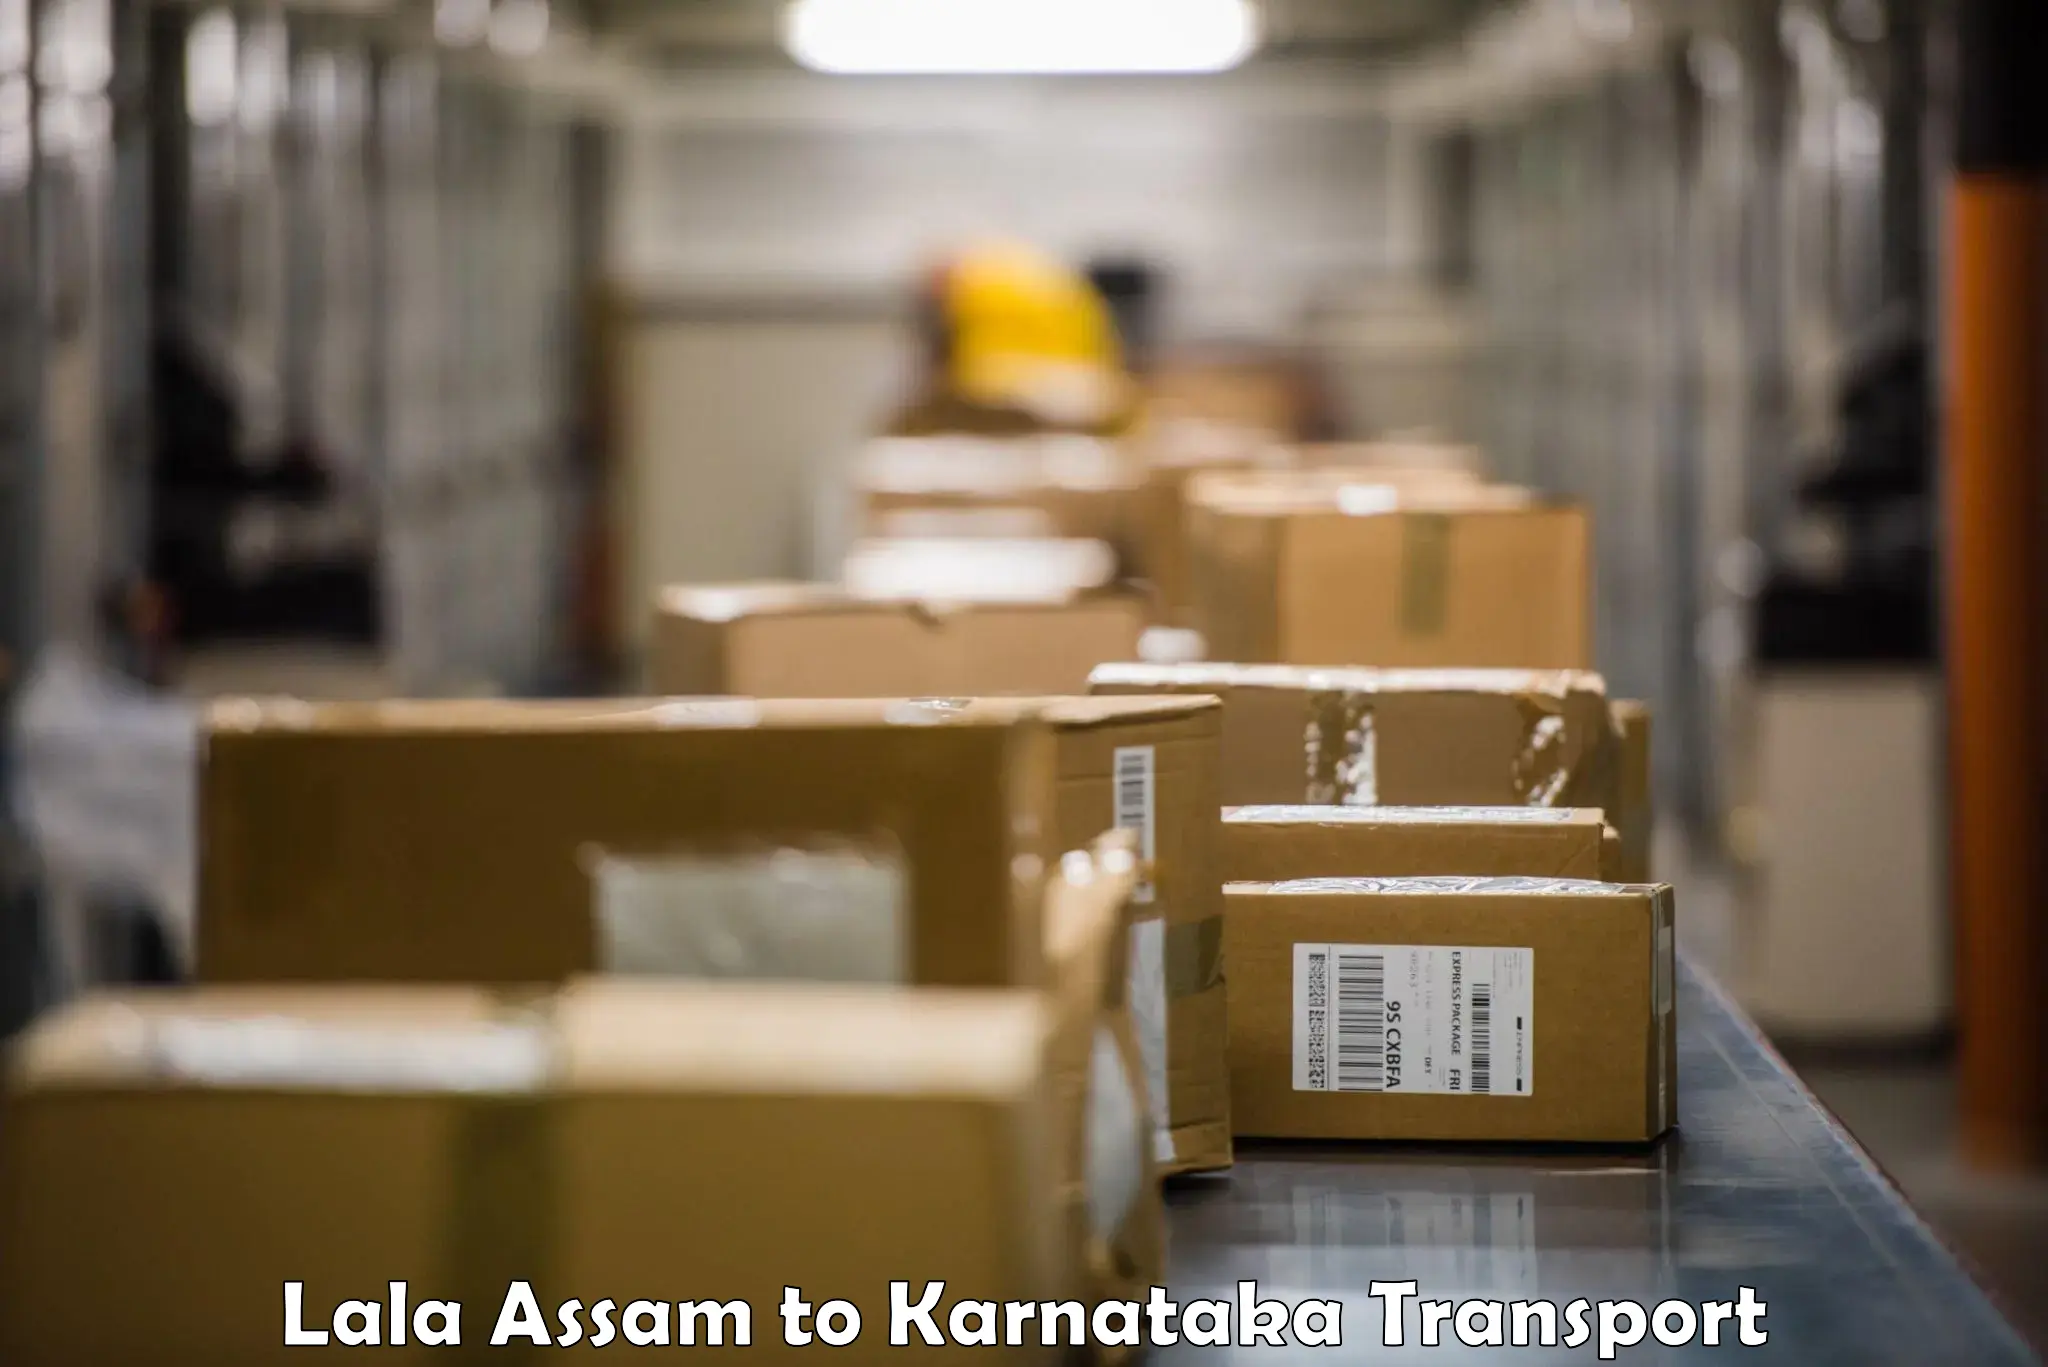 Delivery service Lala Assam to Karnataka